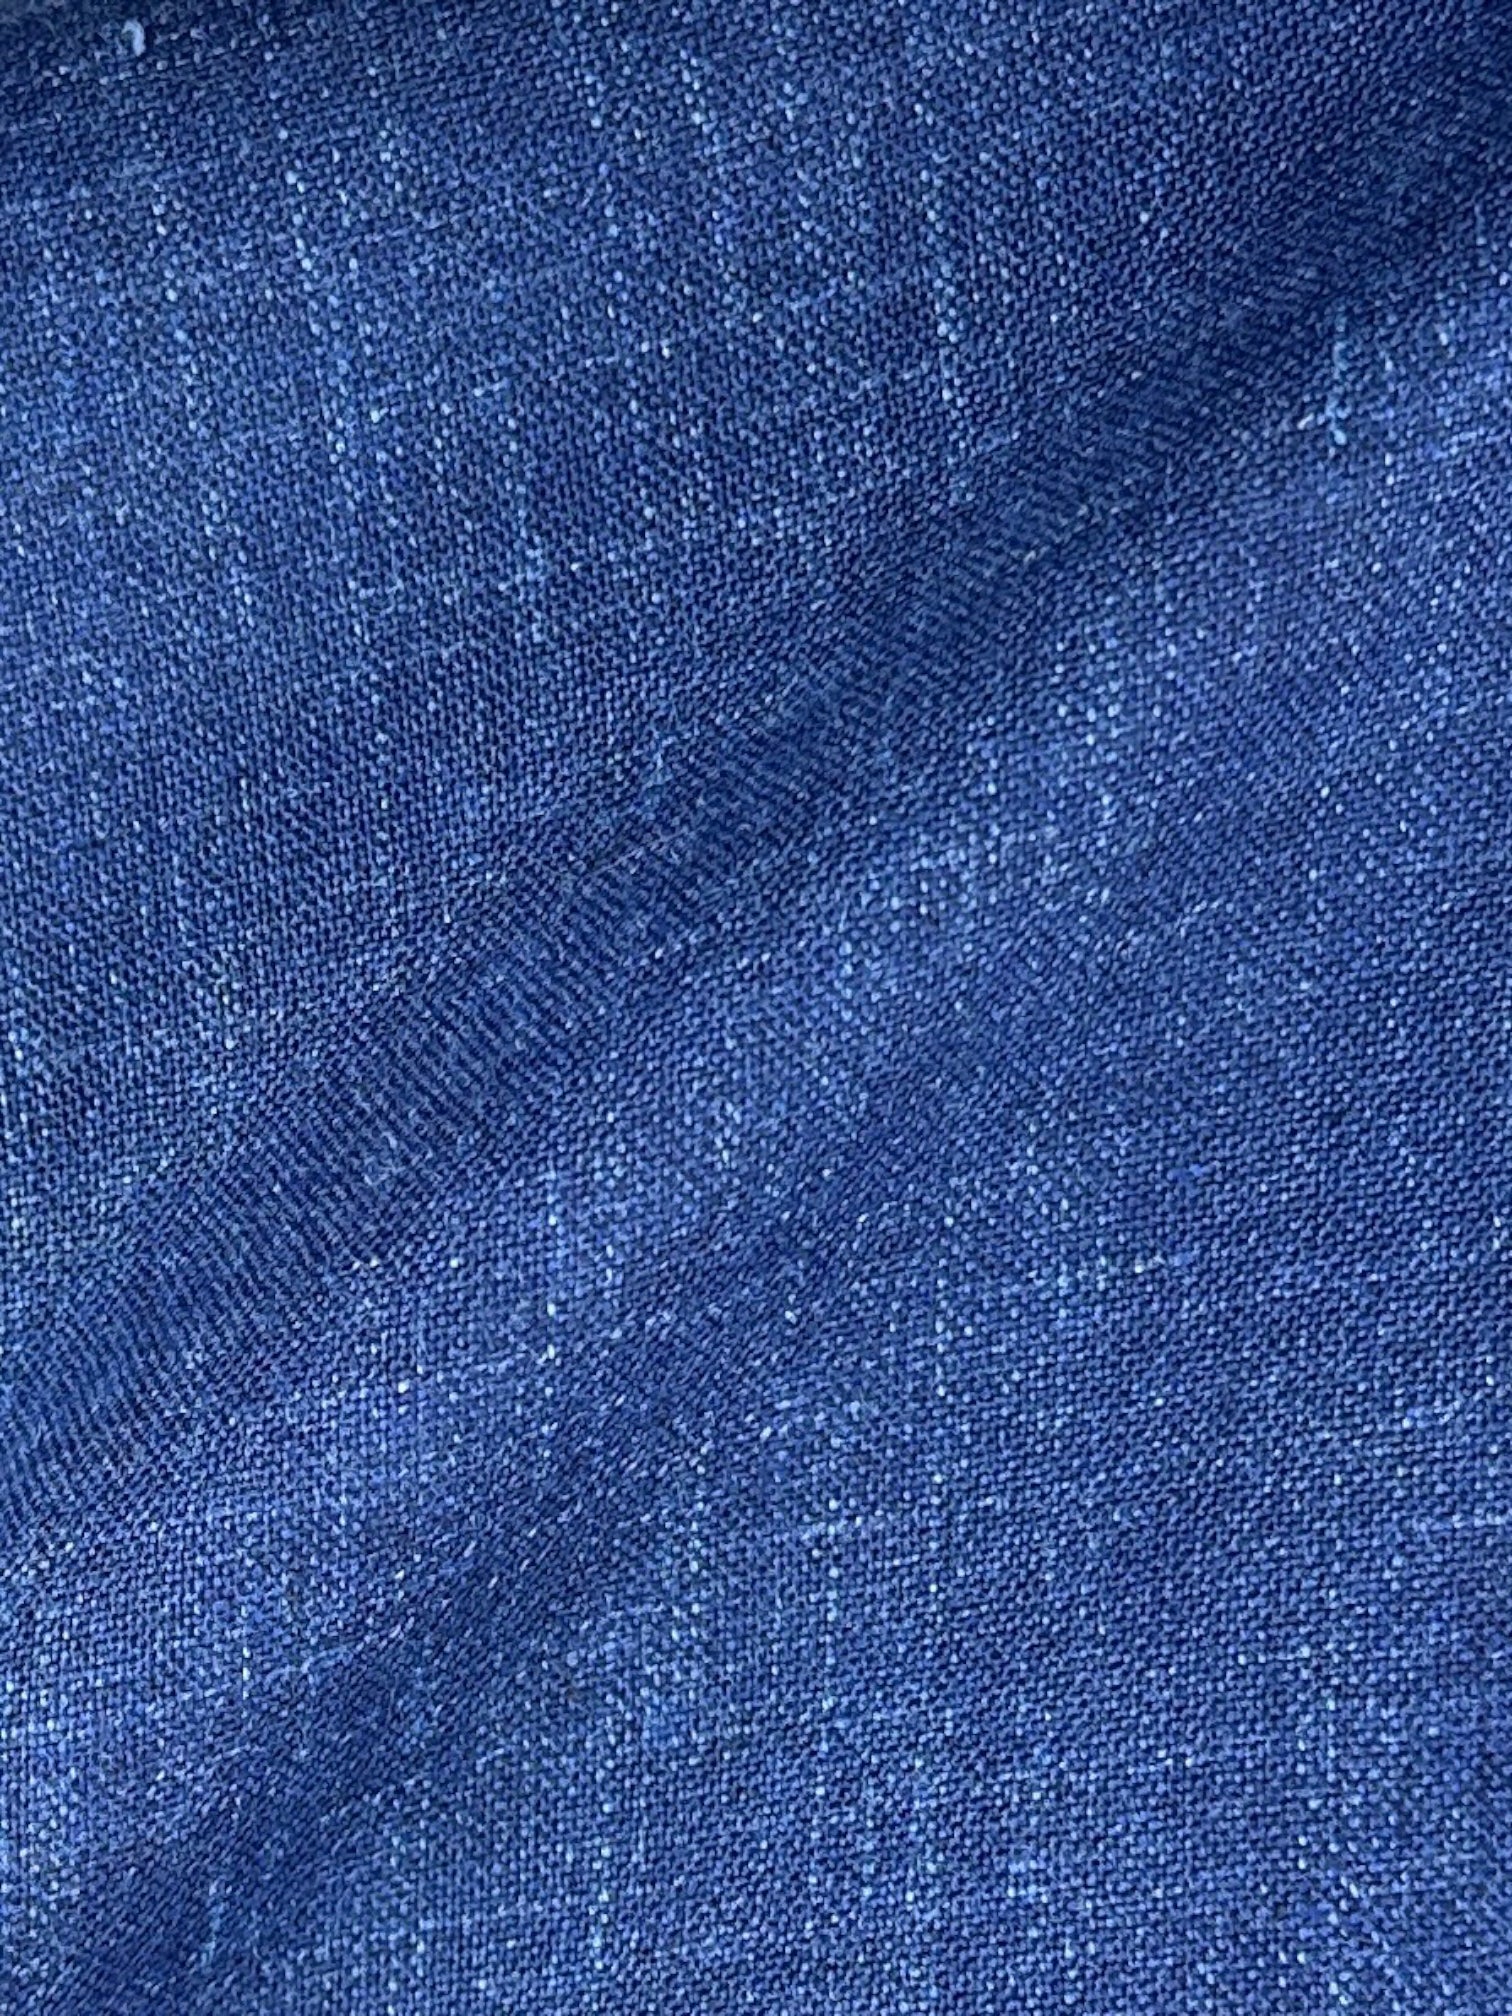 Kiton kobaltblauw pak van kasjmier, linnen en zijde